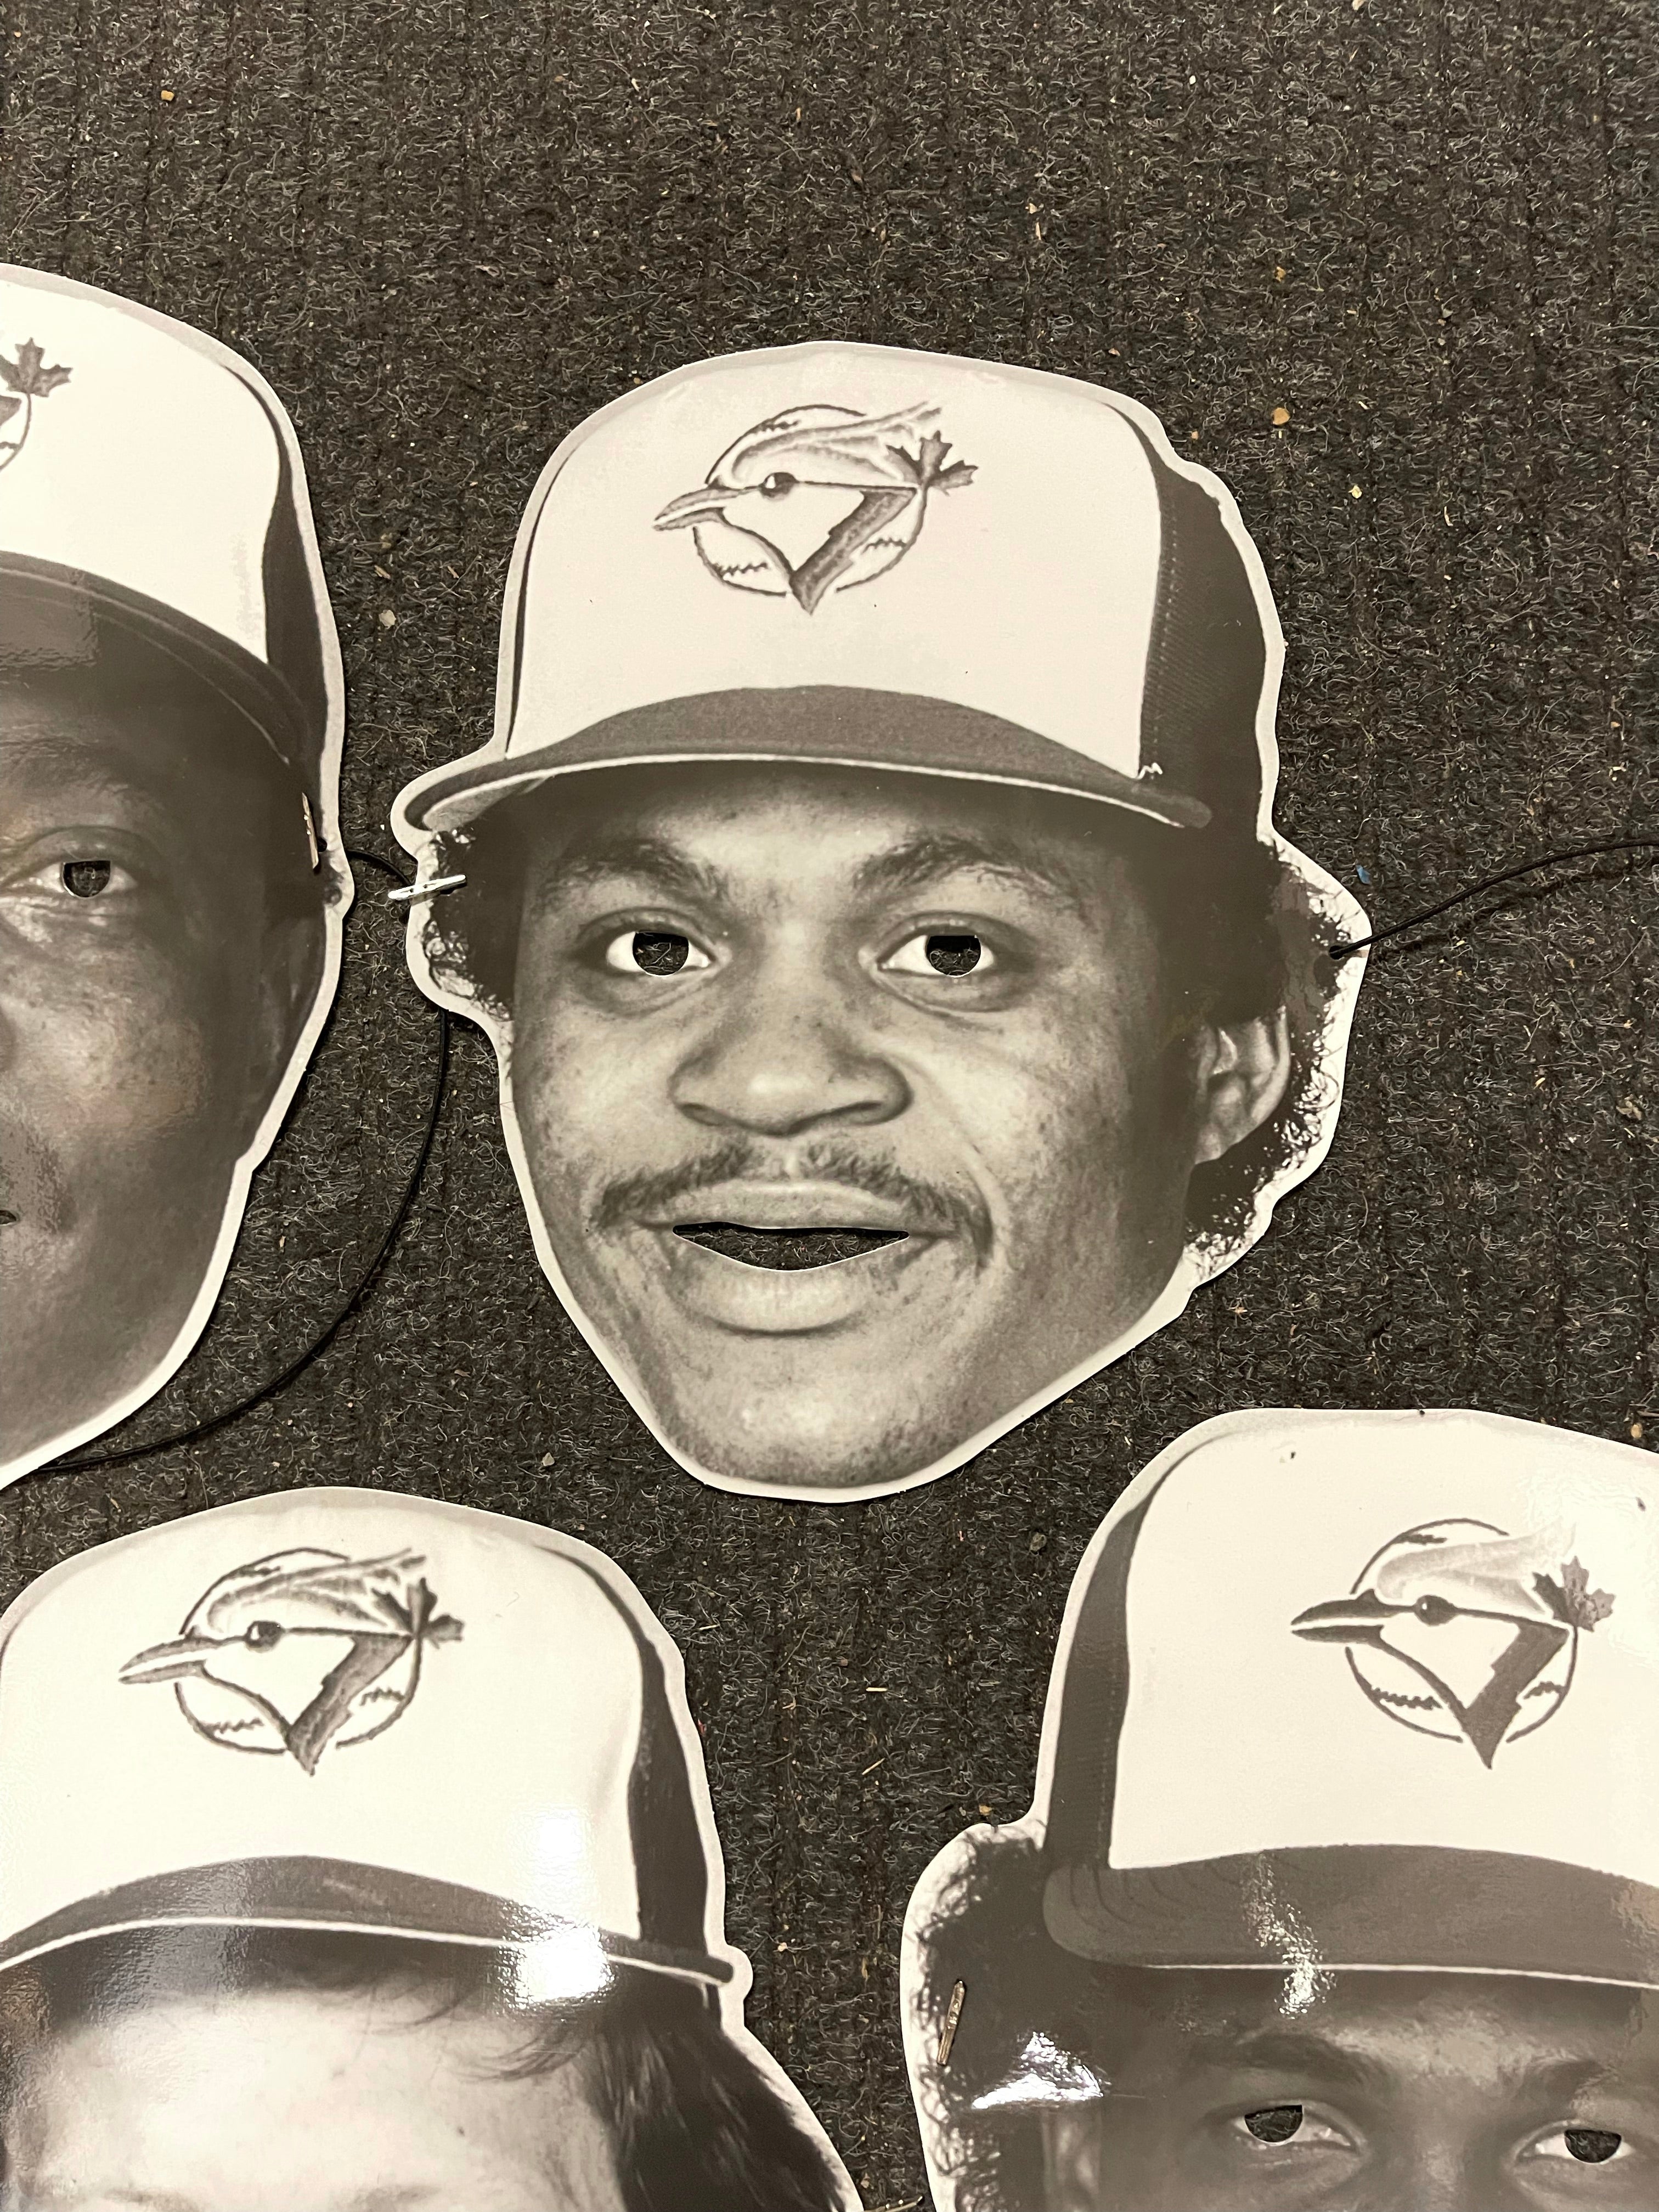 Toronto Blue Jays baseball 5 limited issued stars face masks 1980s